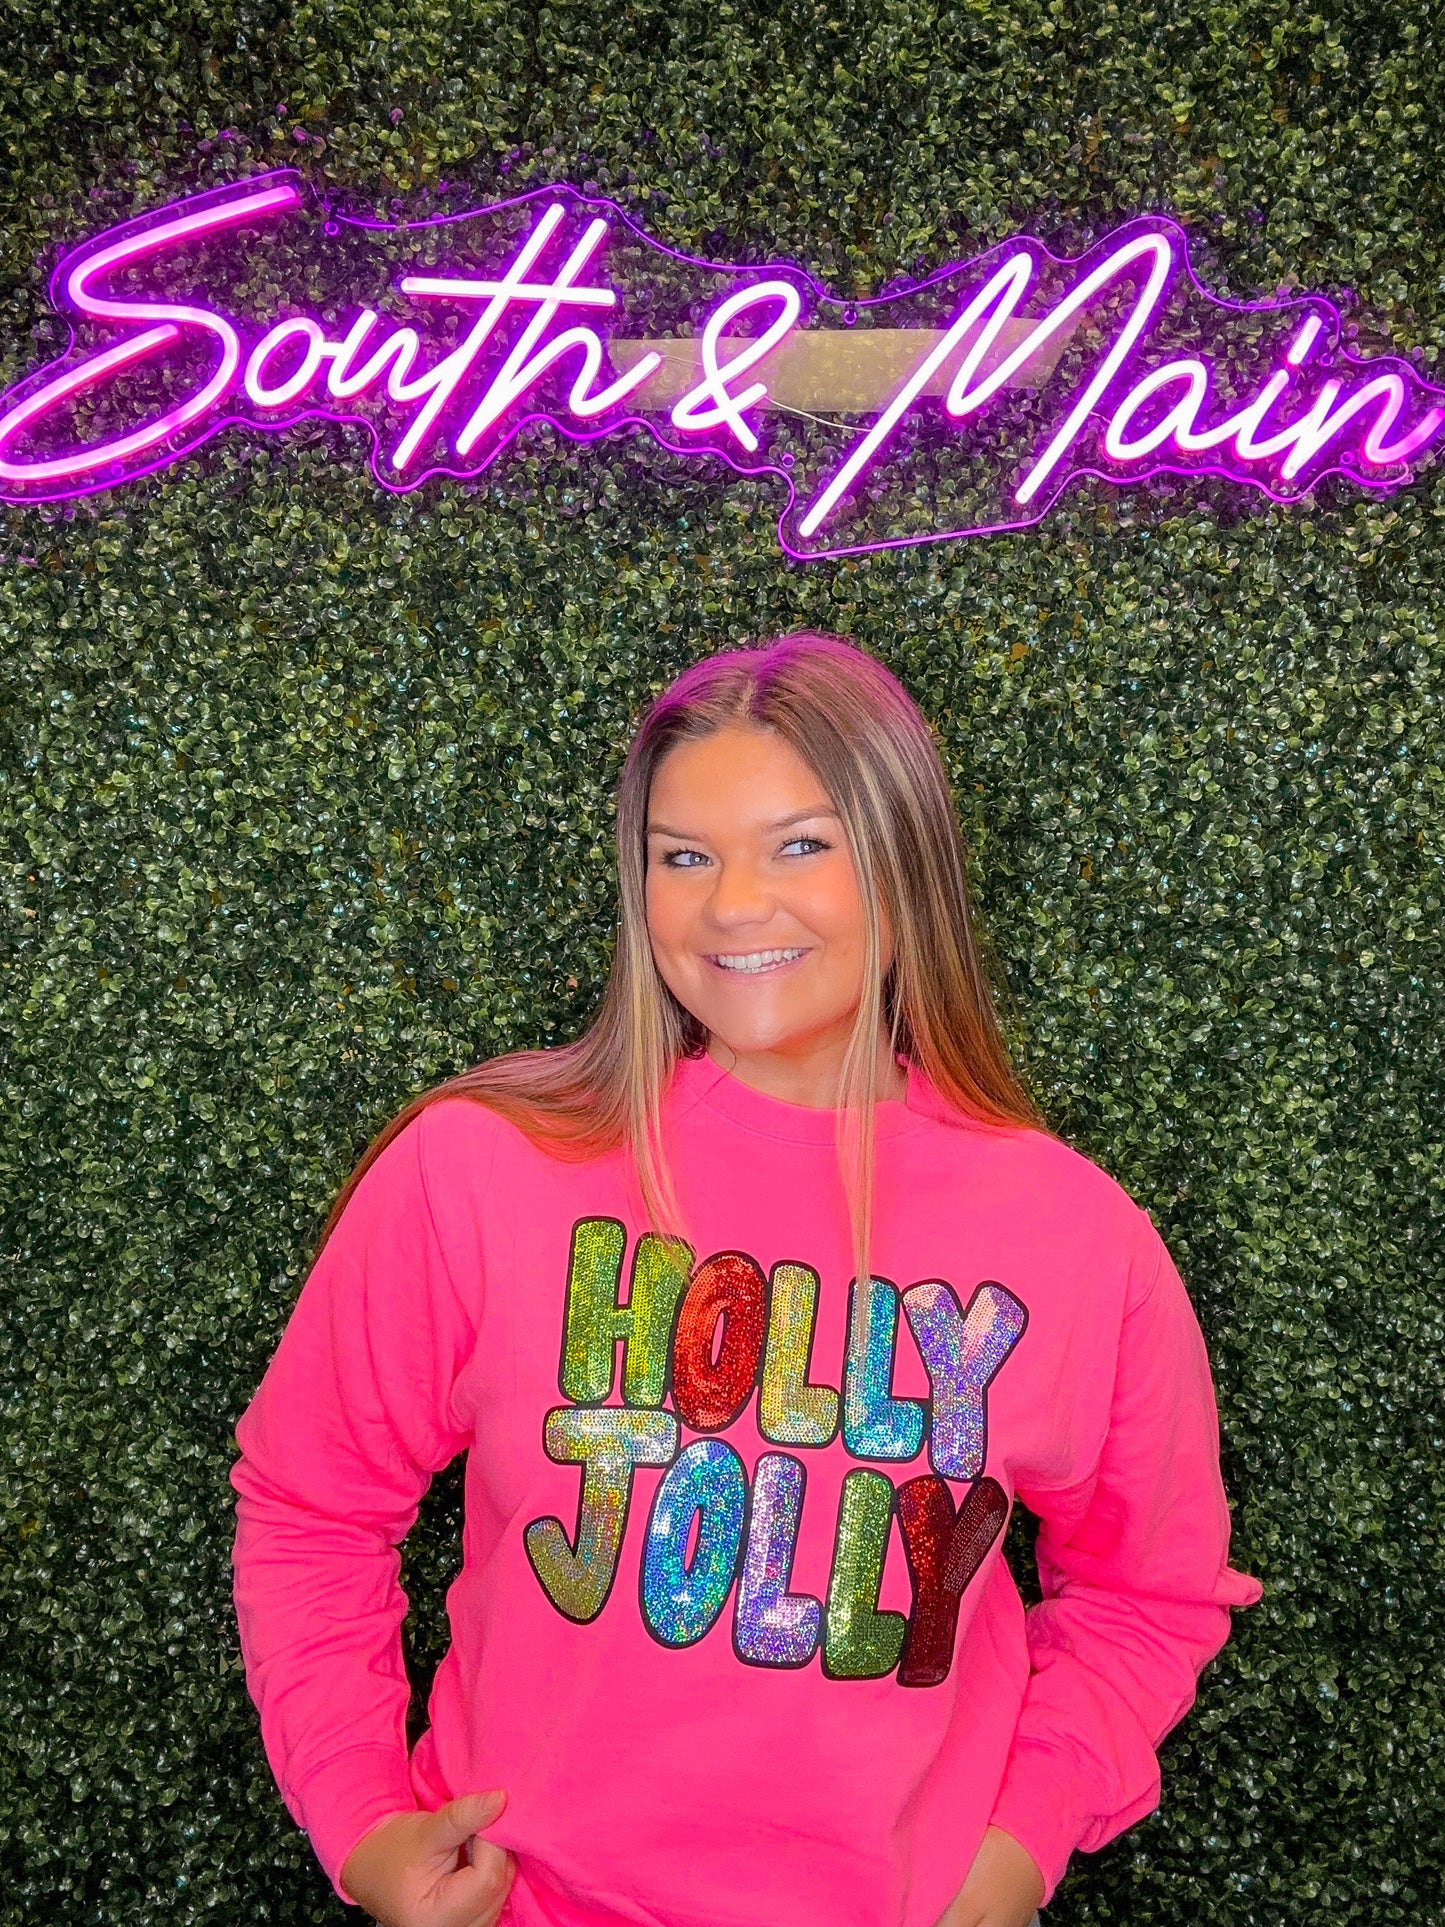 HOLLY JOLLY Sequin Sweatshirt - Bright Pink